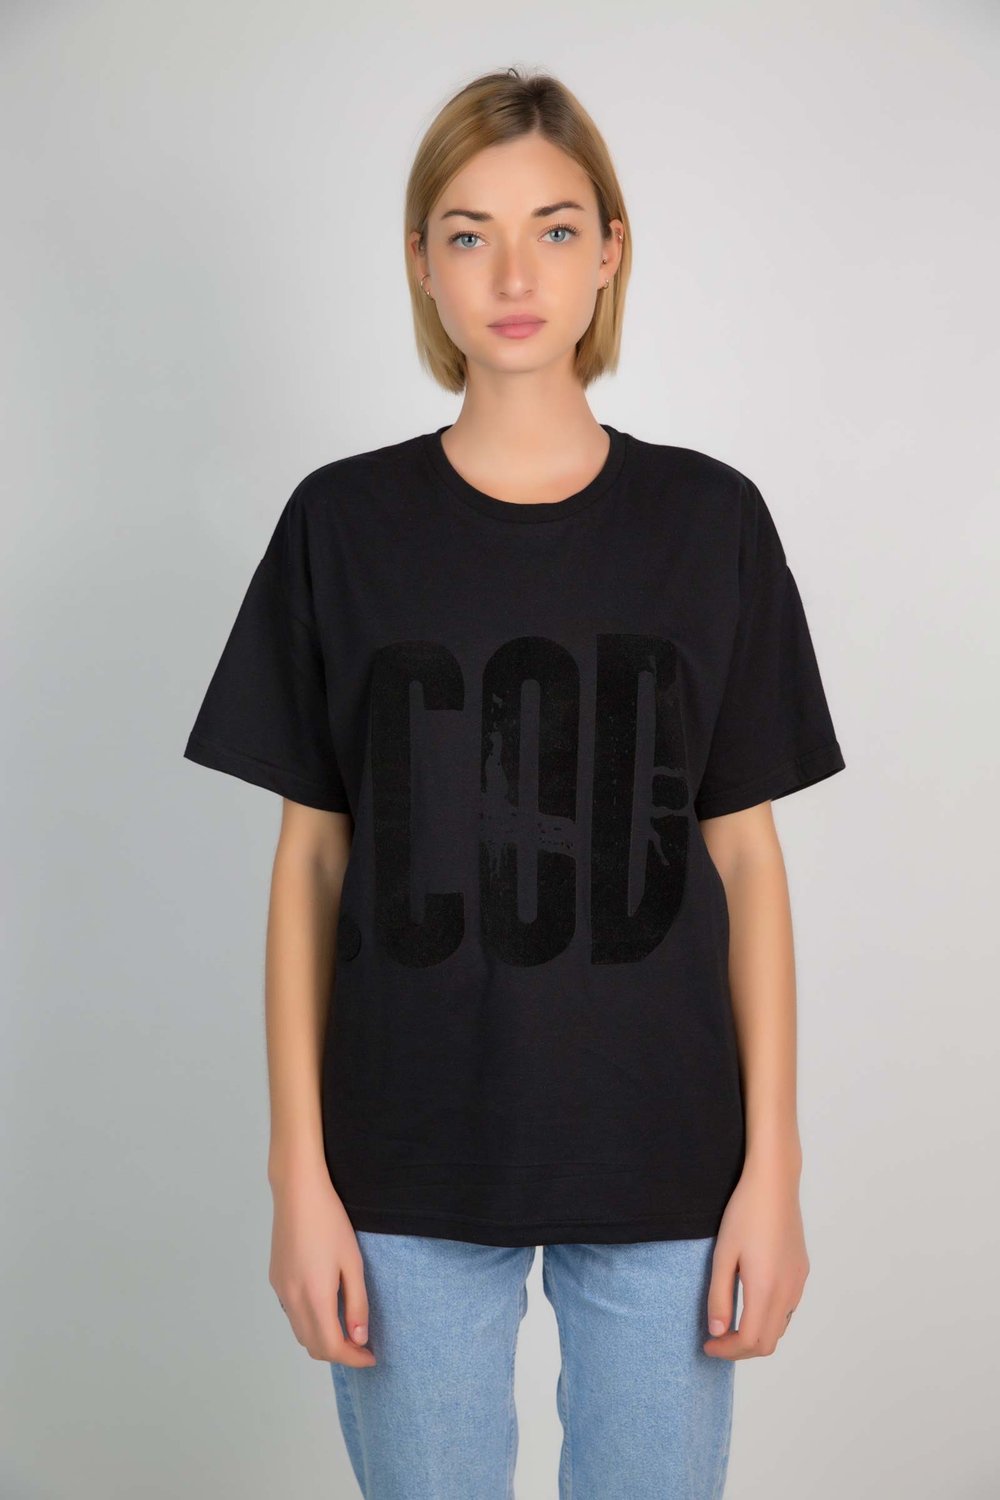 Image of NJ.COD - T-shirt .COD <s>€39.00</s>